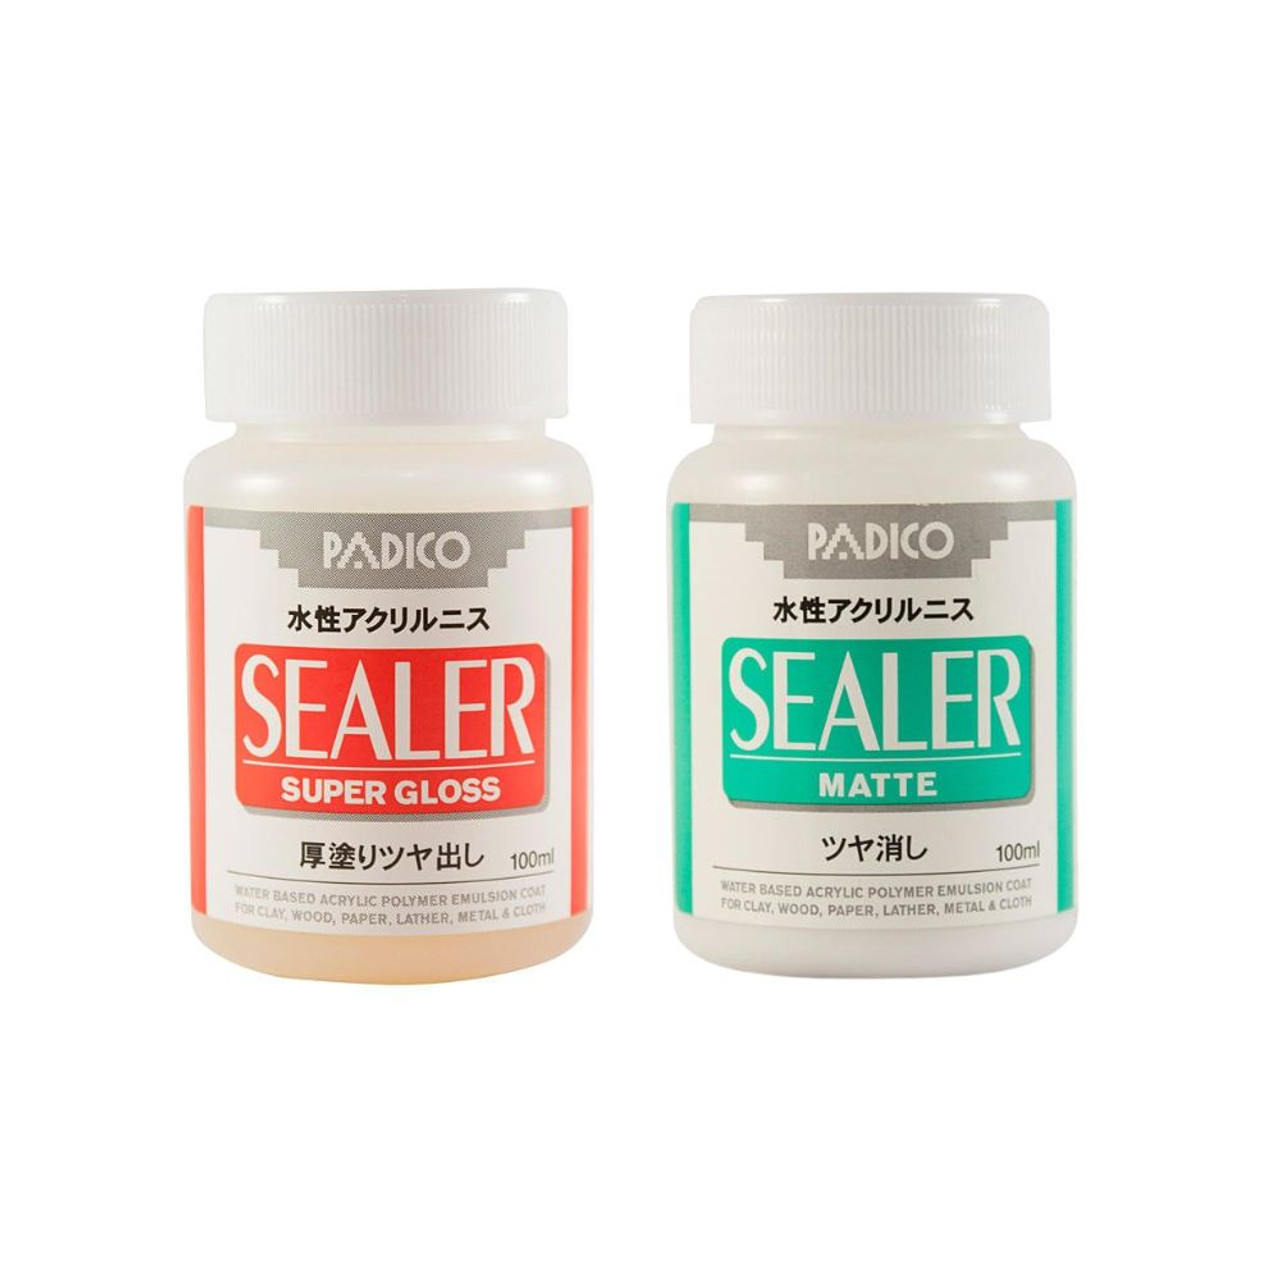 Padico Sealer - Matte and Super Gloss